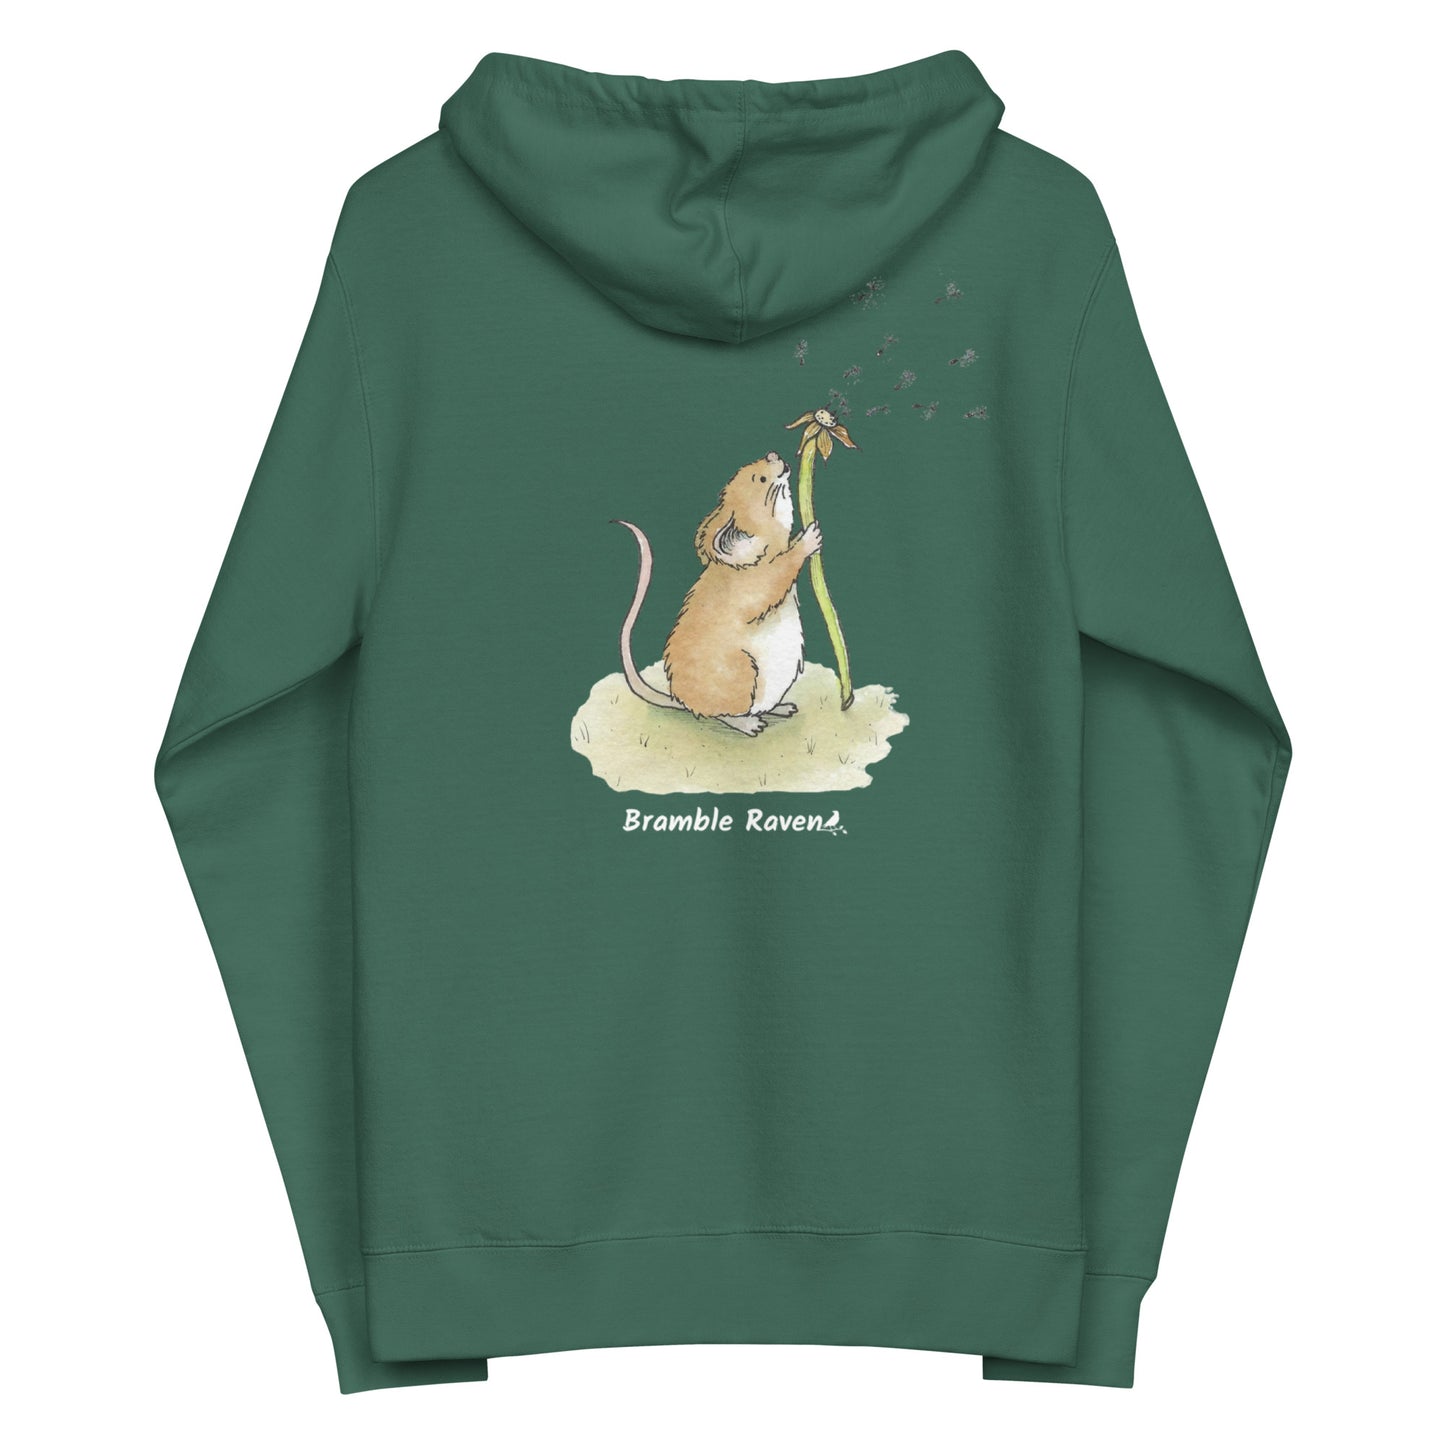 Dandelion wish design of cute watercolor mouse blowing dandelion seeds on the back of an alpine green fleece zip up hoodie